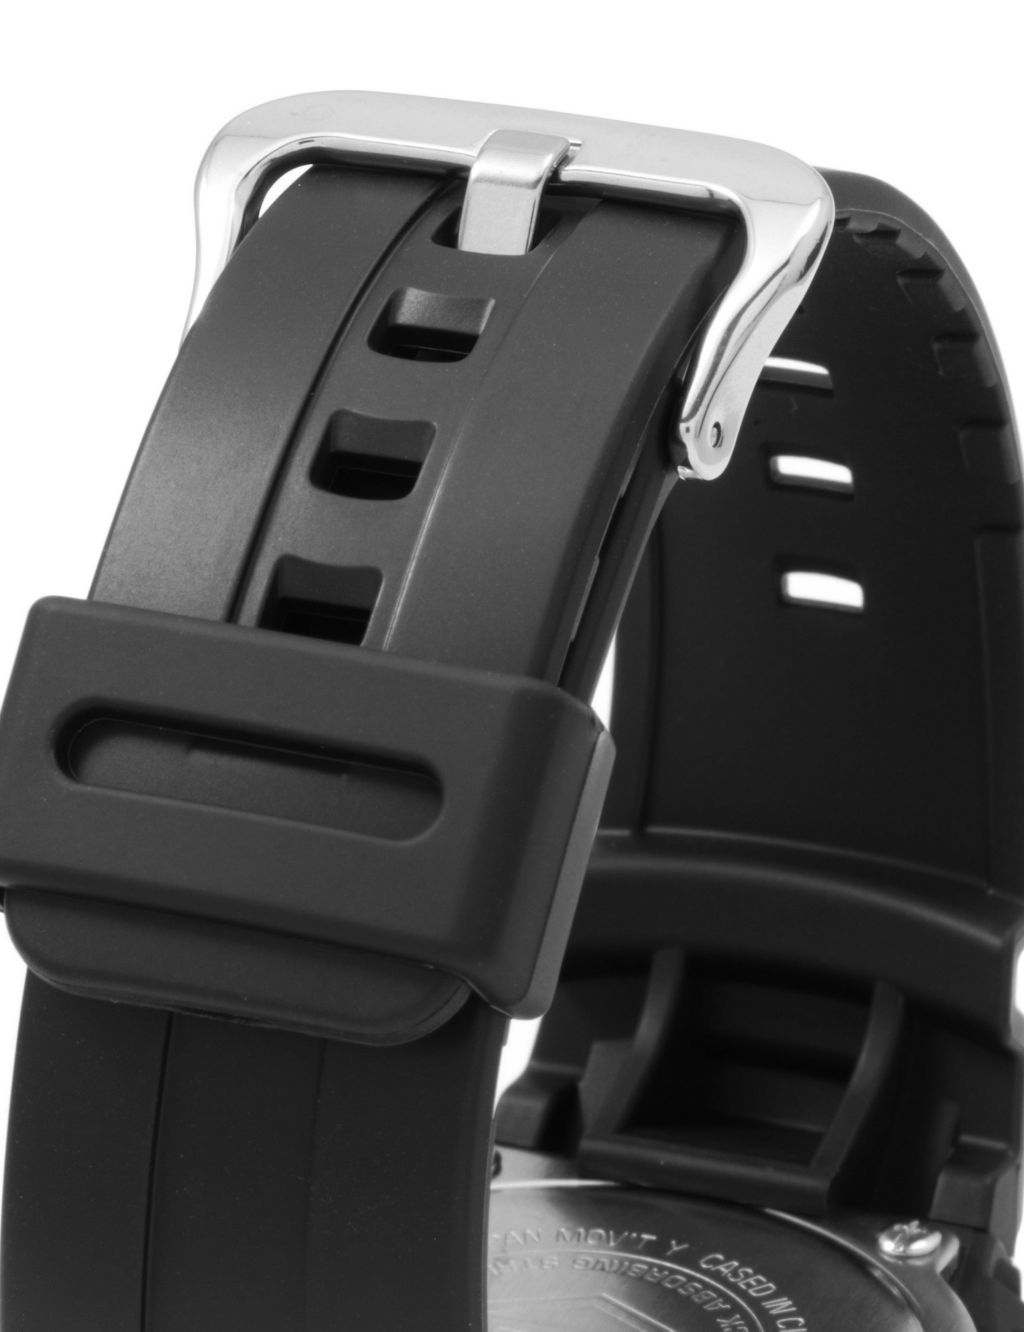 Casio G-Shock Alarm Chronograph Black Watch image 4